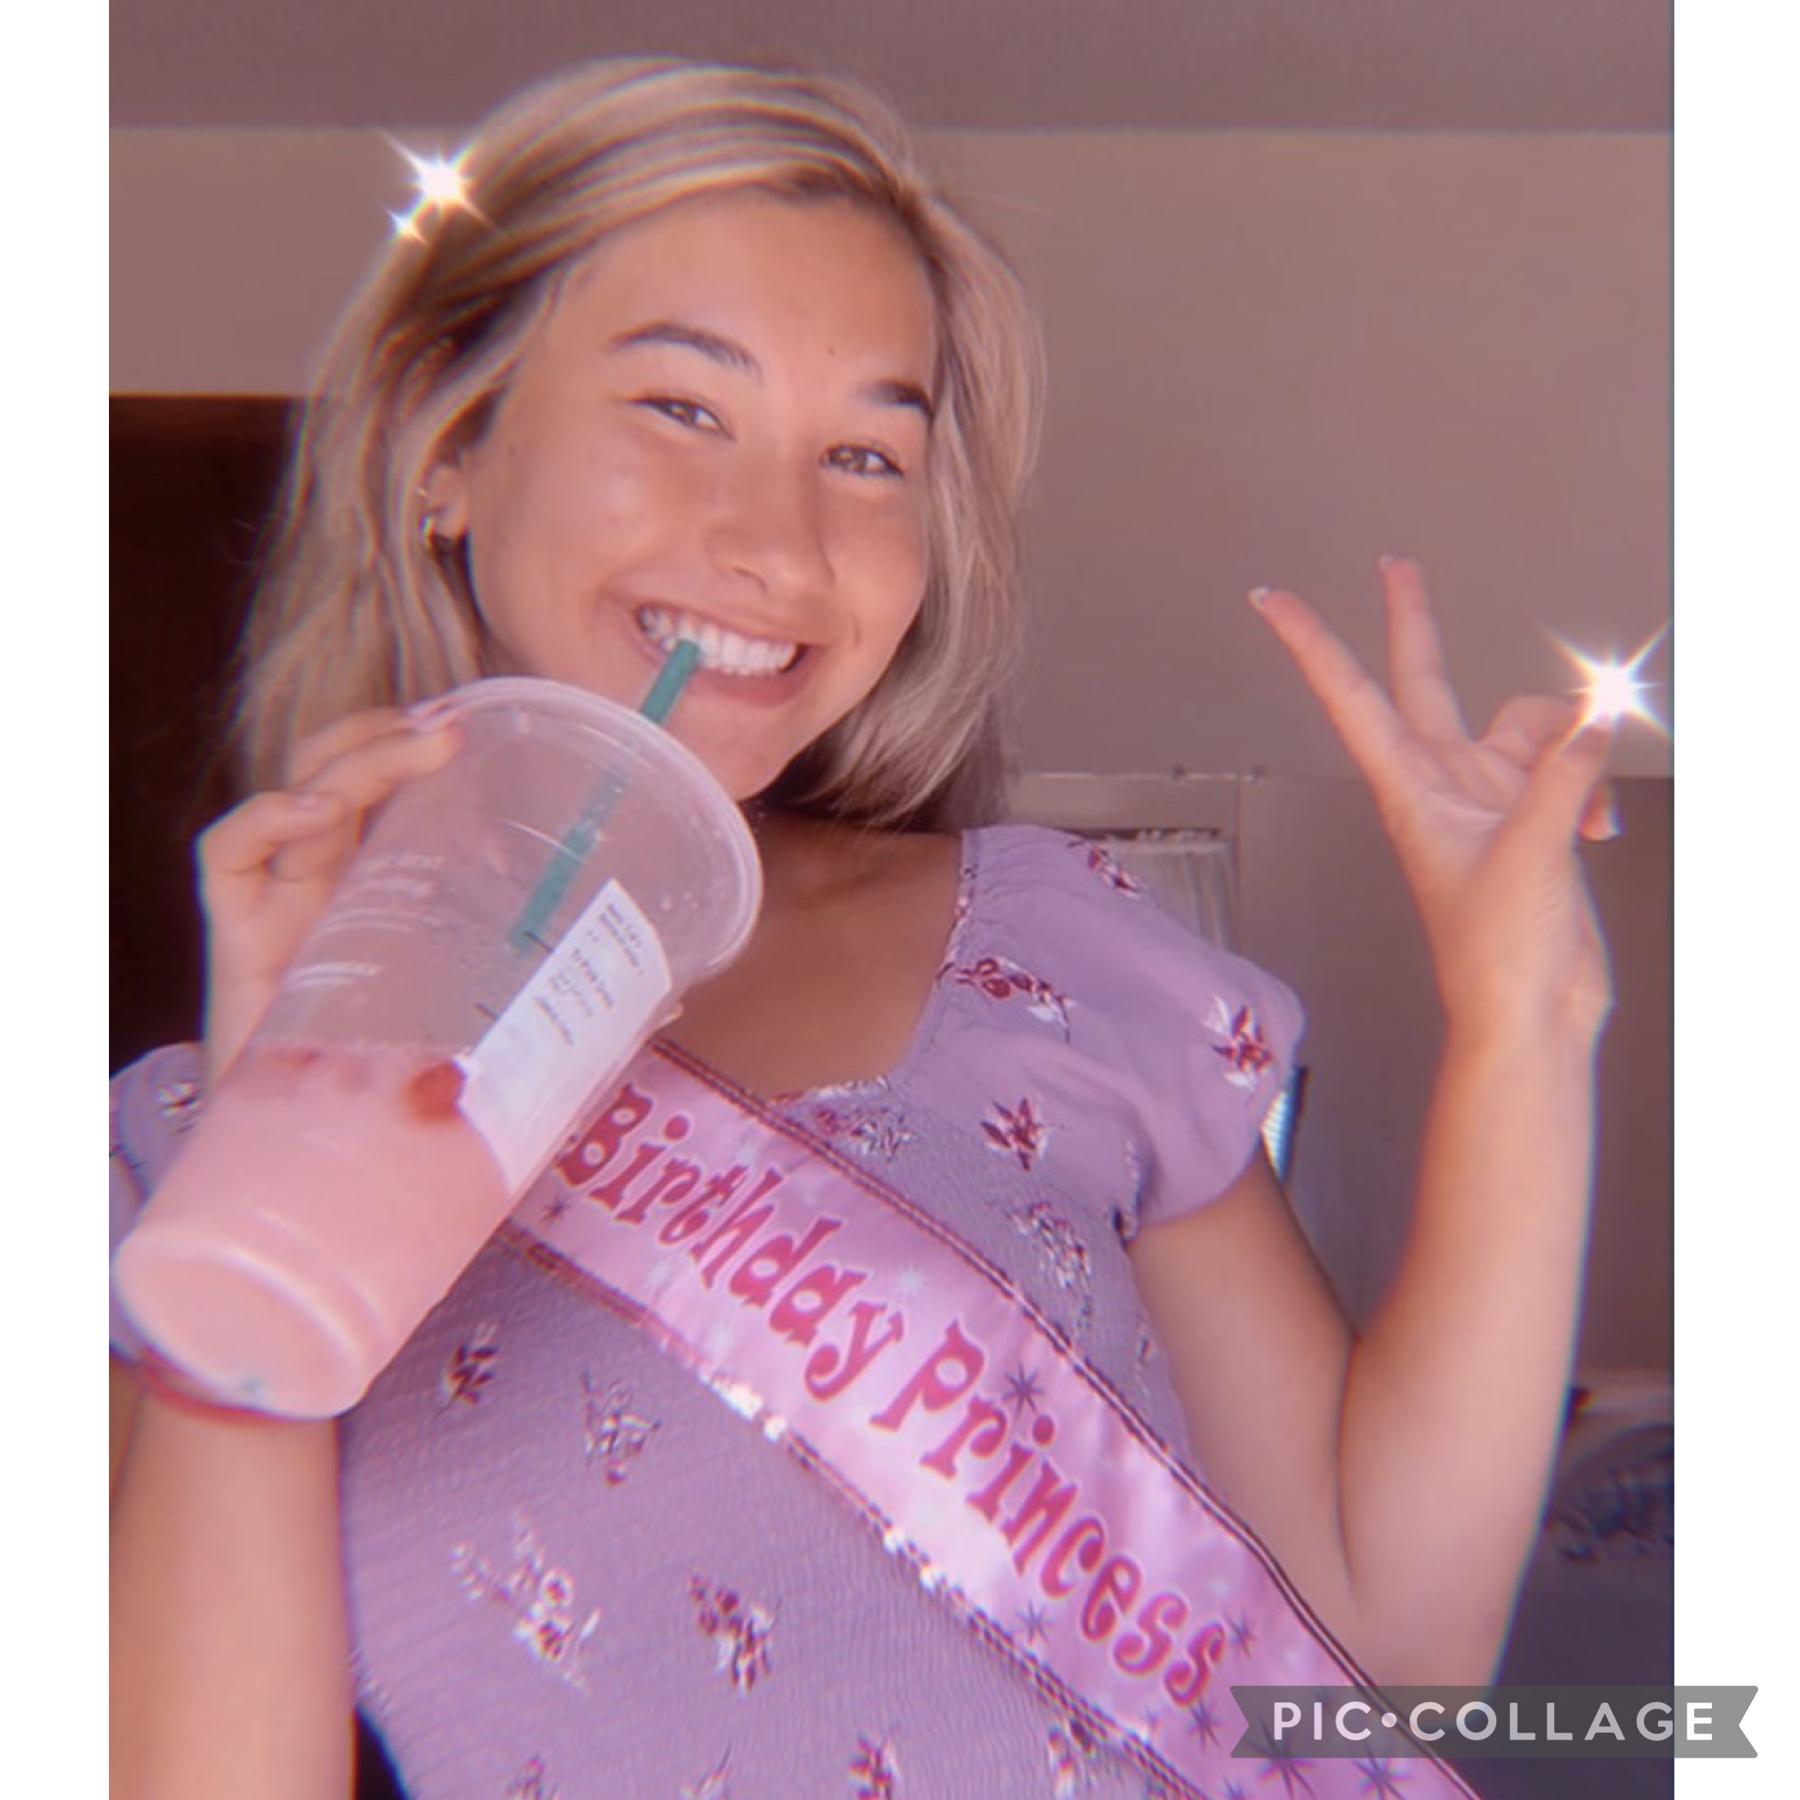 I’m the birthday princess today 